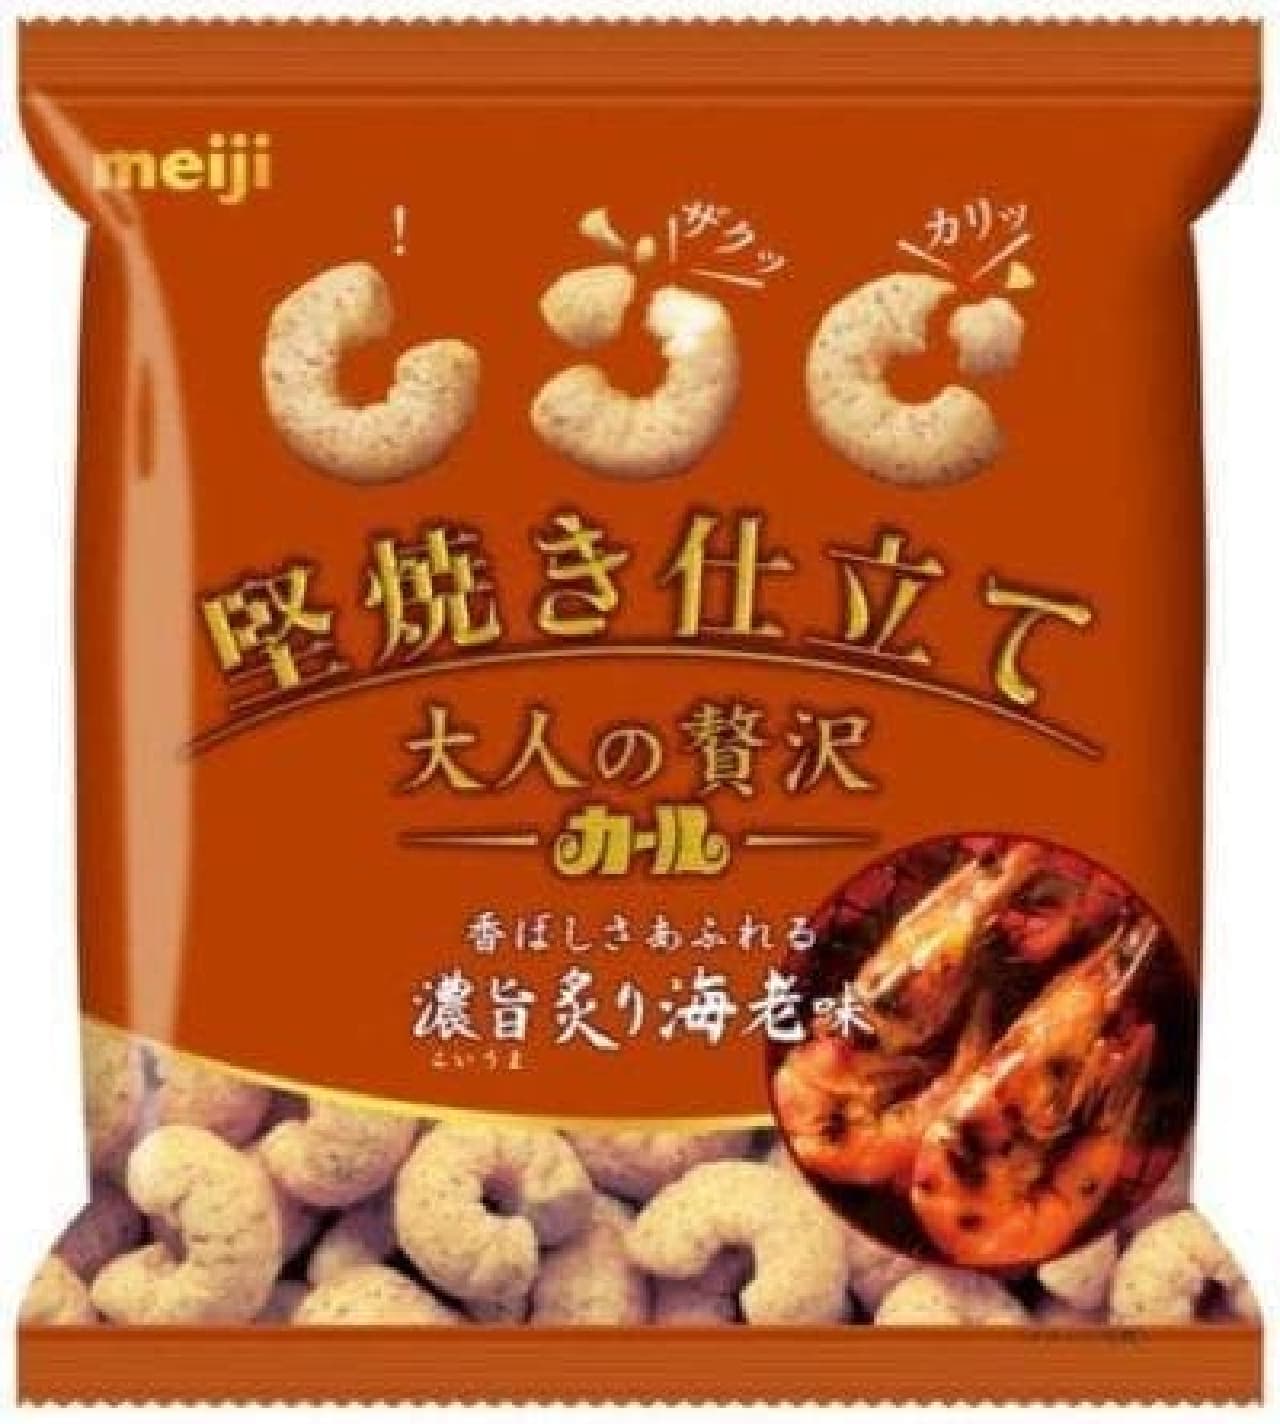 Meiji "Adult luxury curl rich roasted shrimp taste"